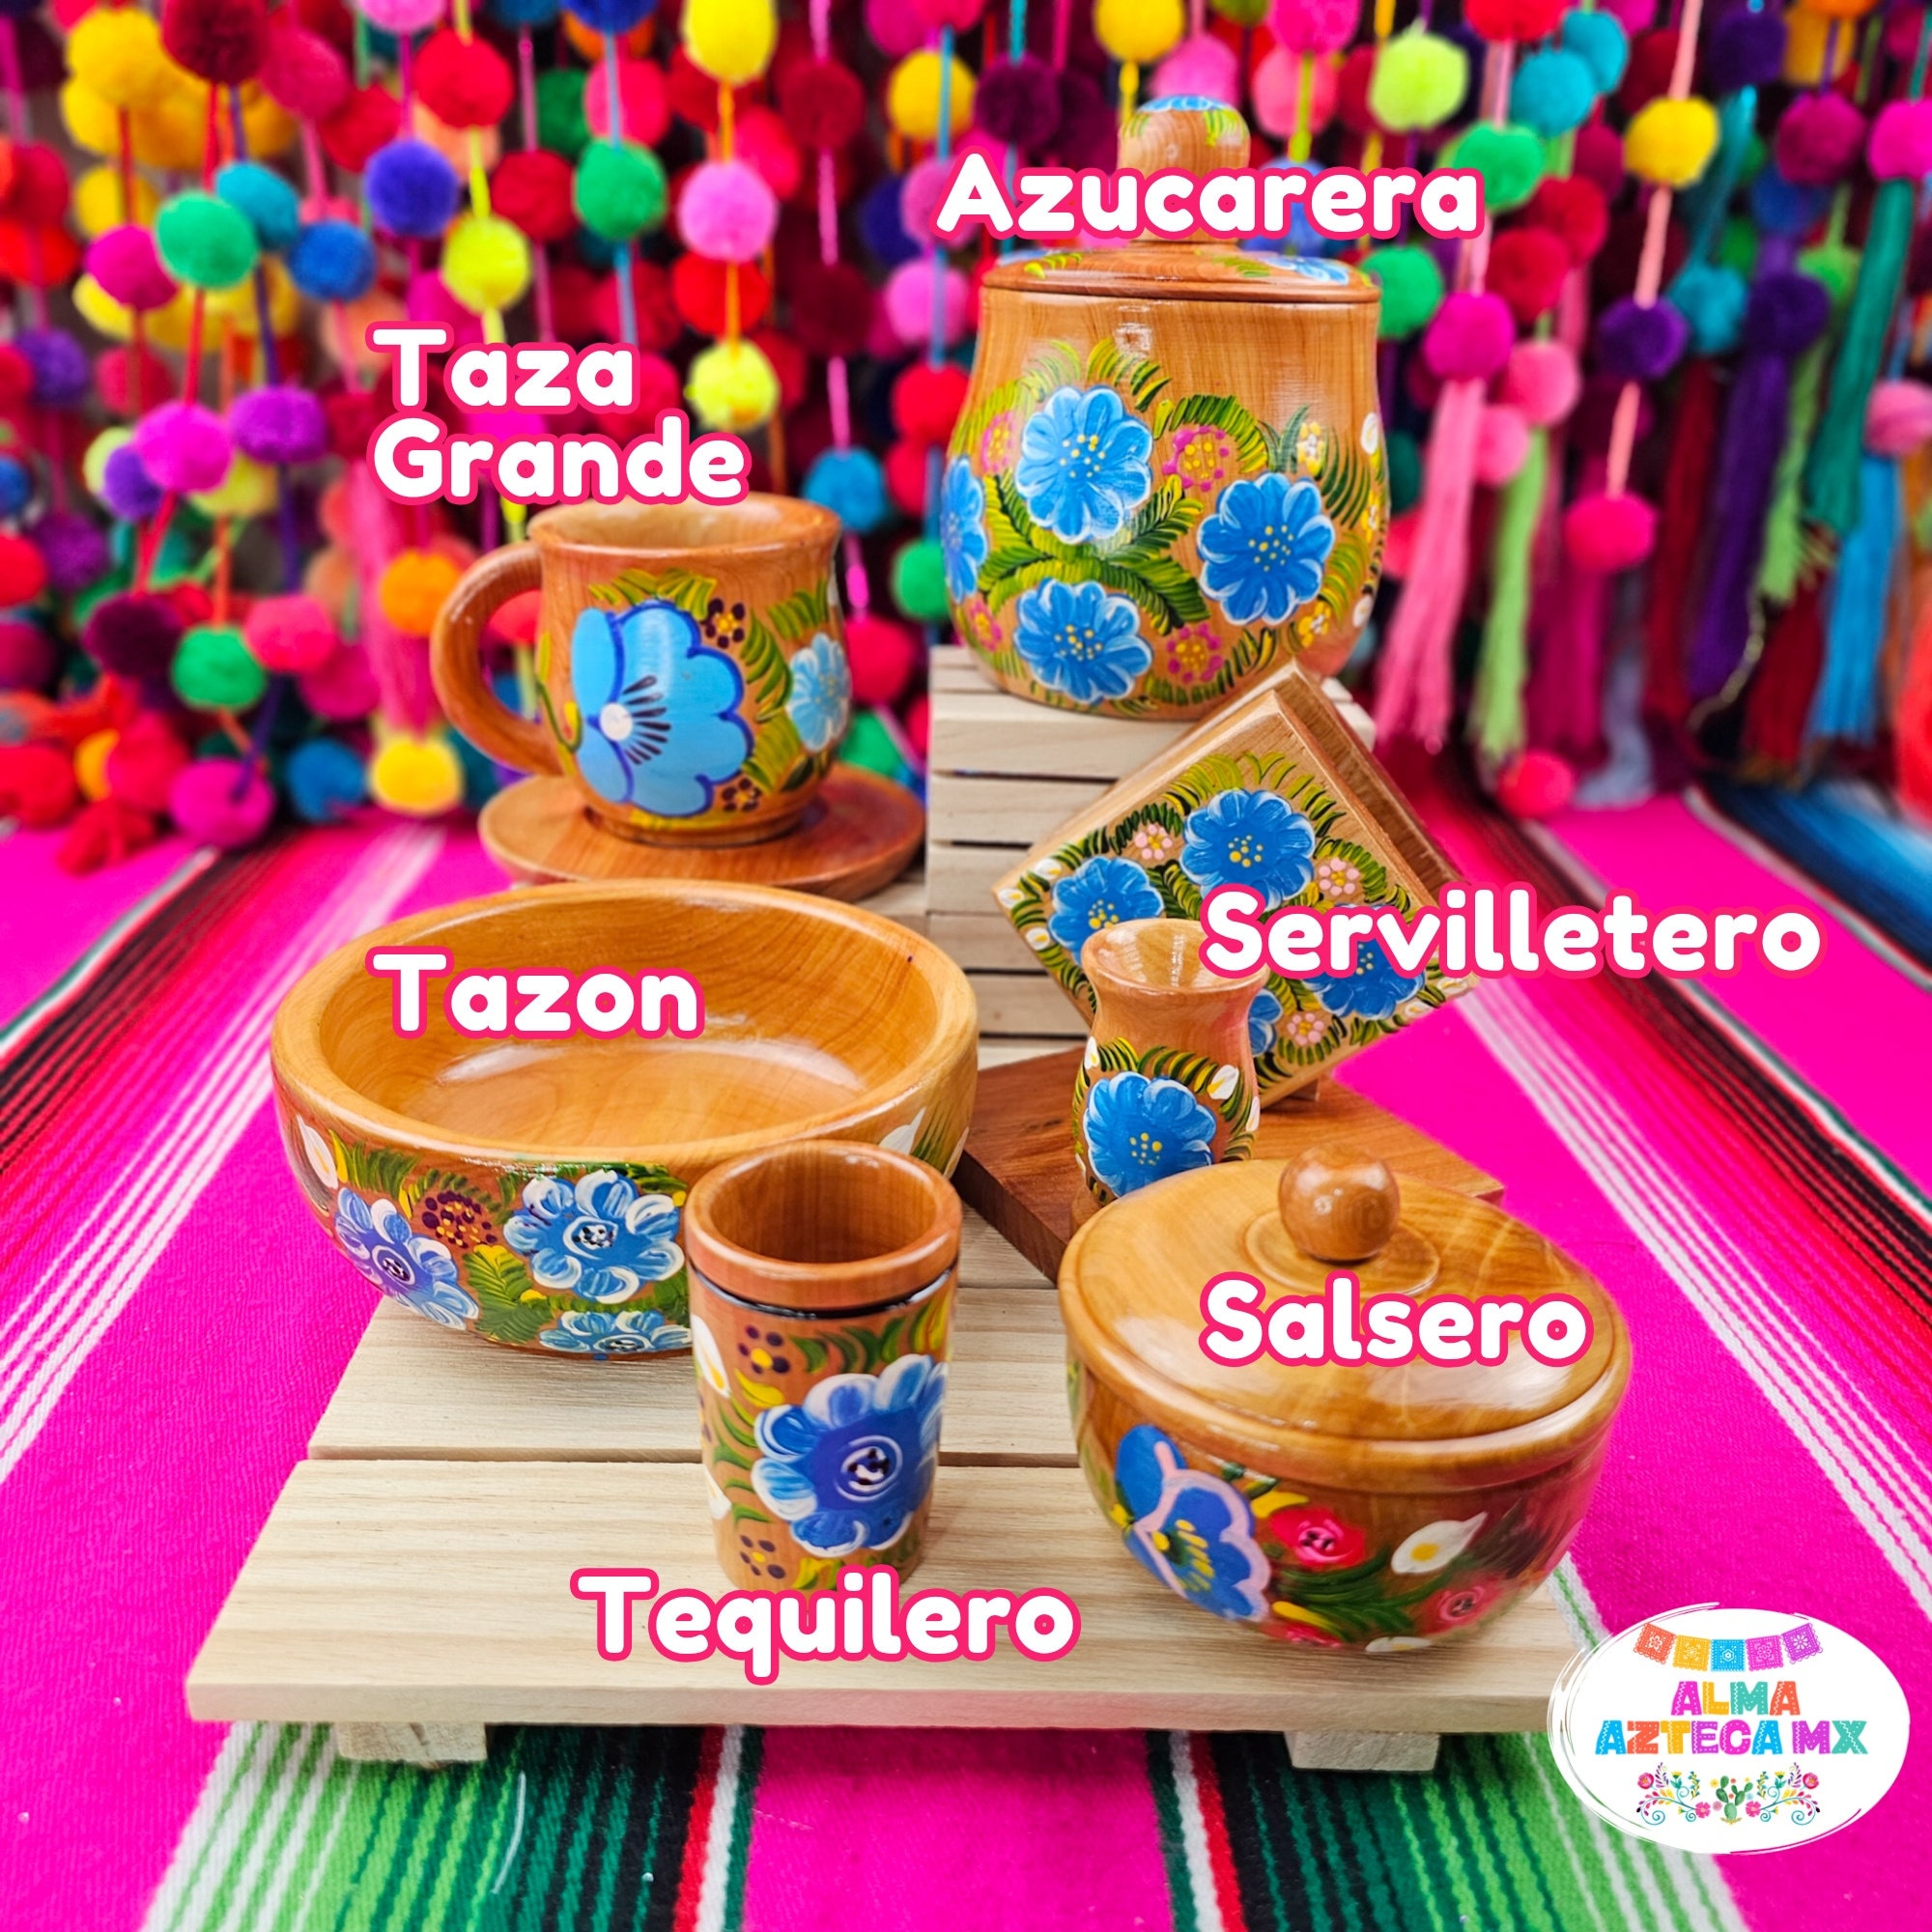 Bright Pink Handpainted Wooden Kitchen Accessories / Cocina Mexicana / Mexican  Kitchen / Servilletero Prensa Tazas De Madera / Cocina Rosa 